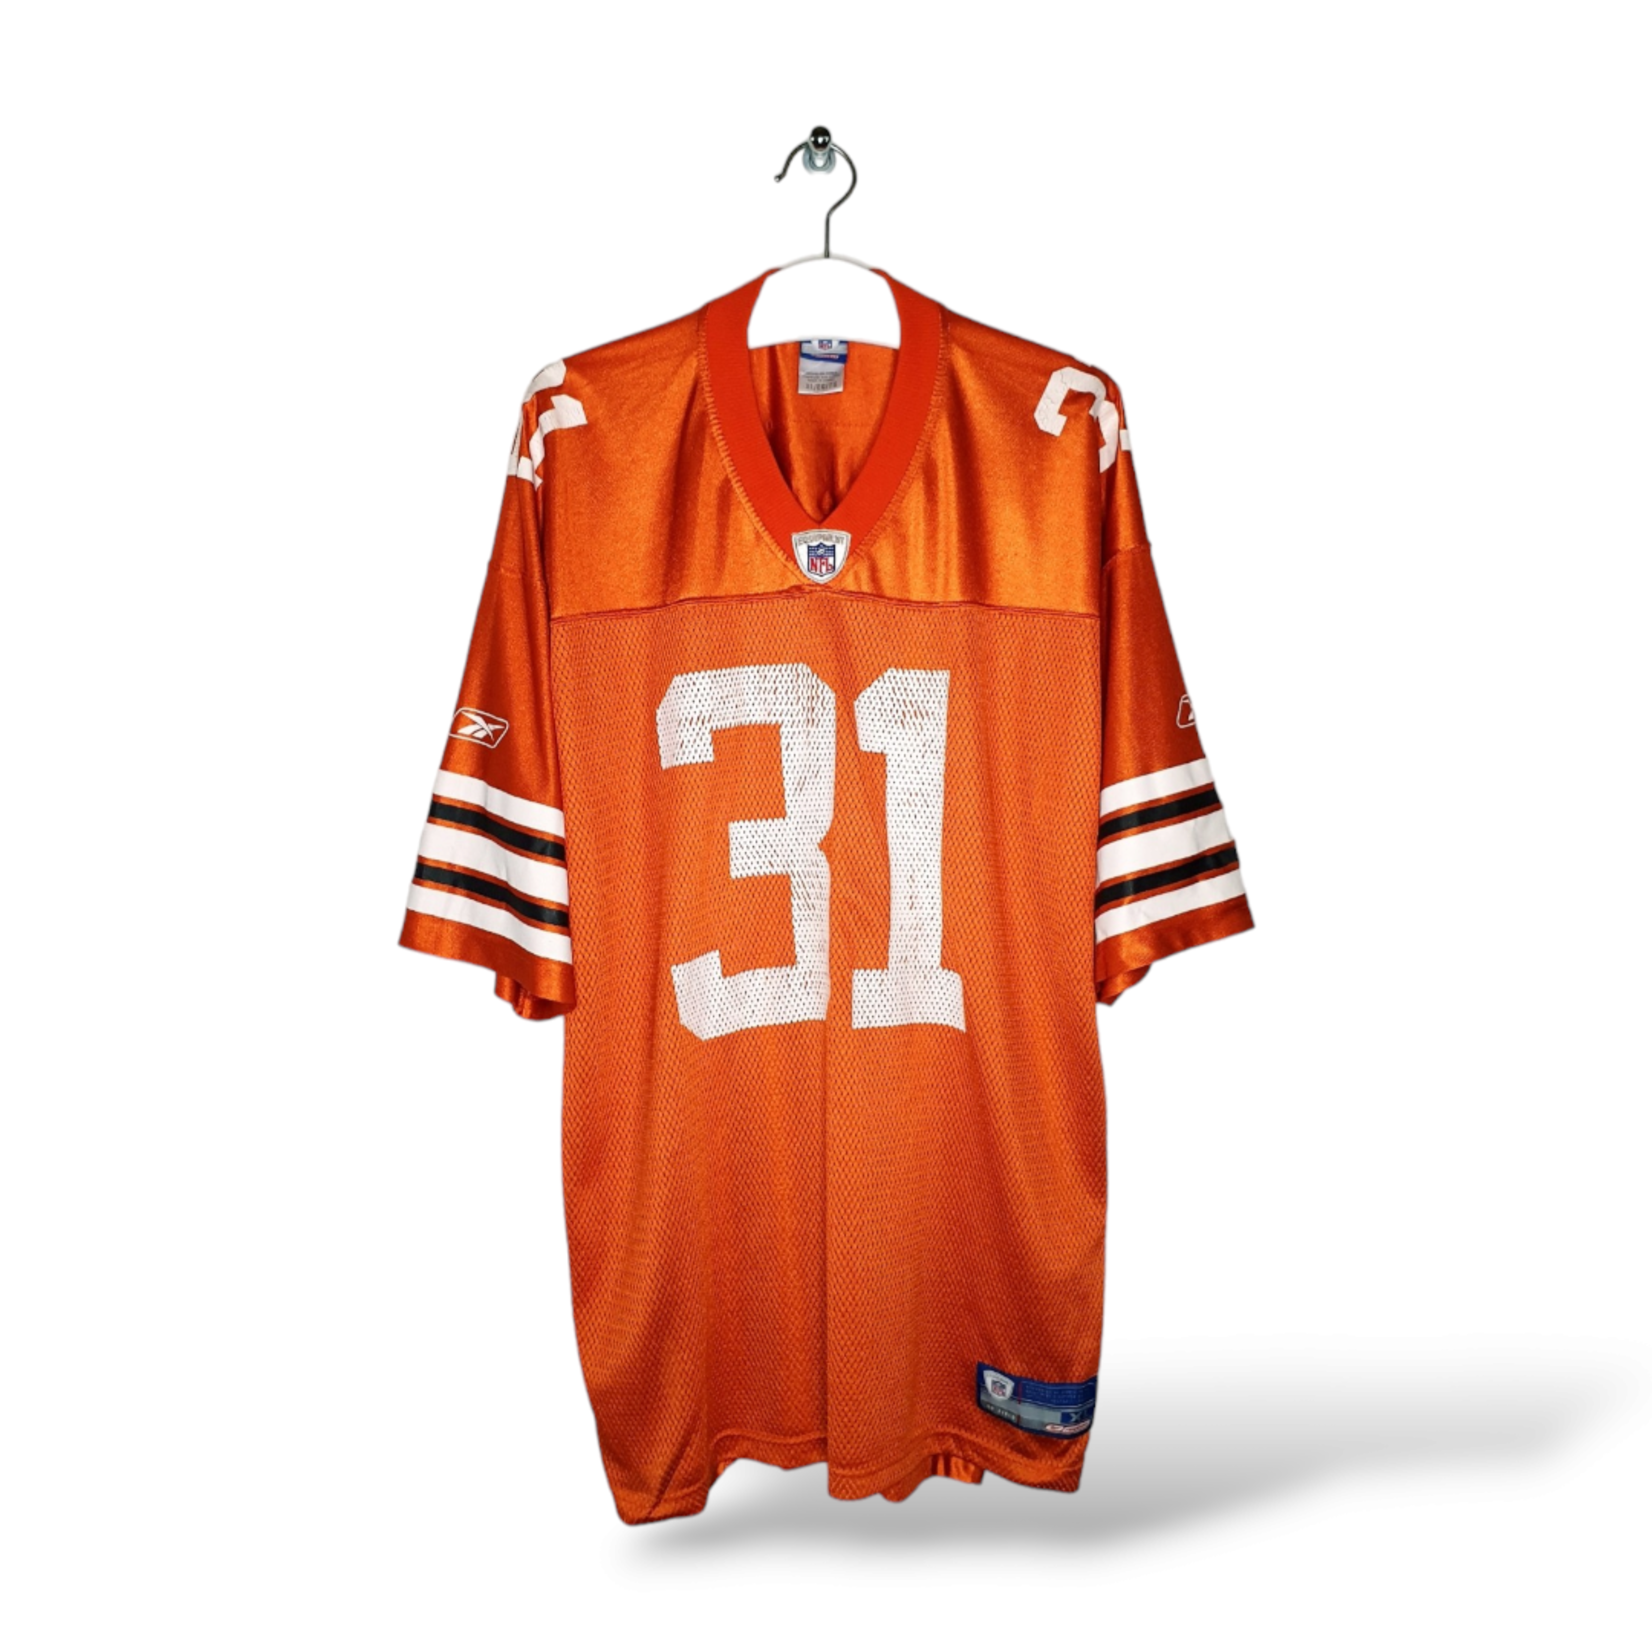 Reebok Origineel Reebok vintage NFL shirt Cleveland Browns - William Greene